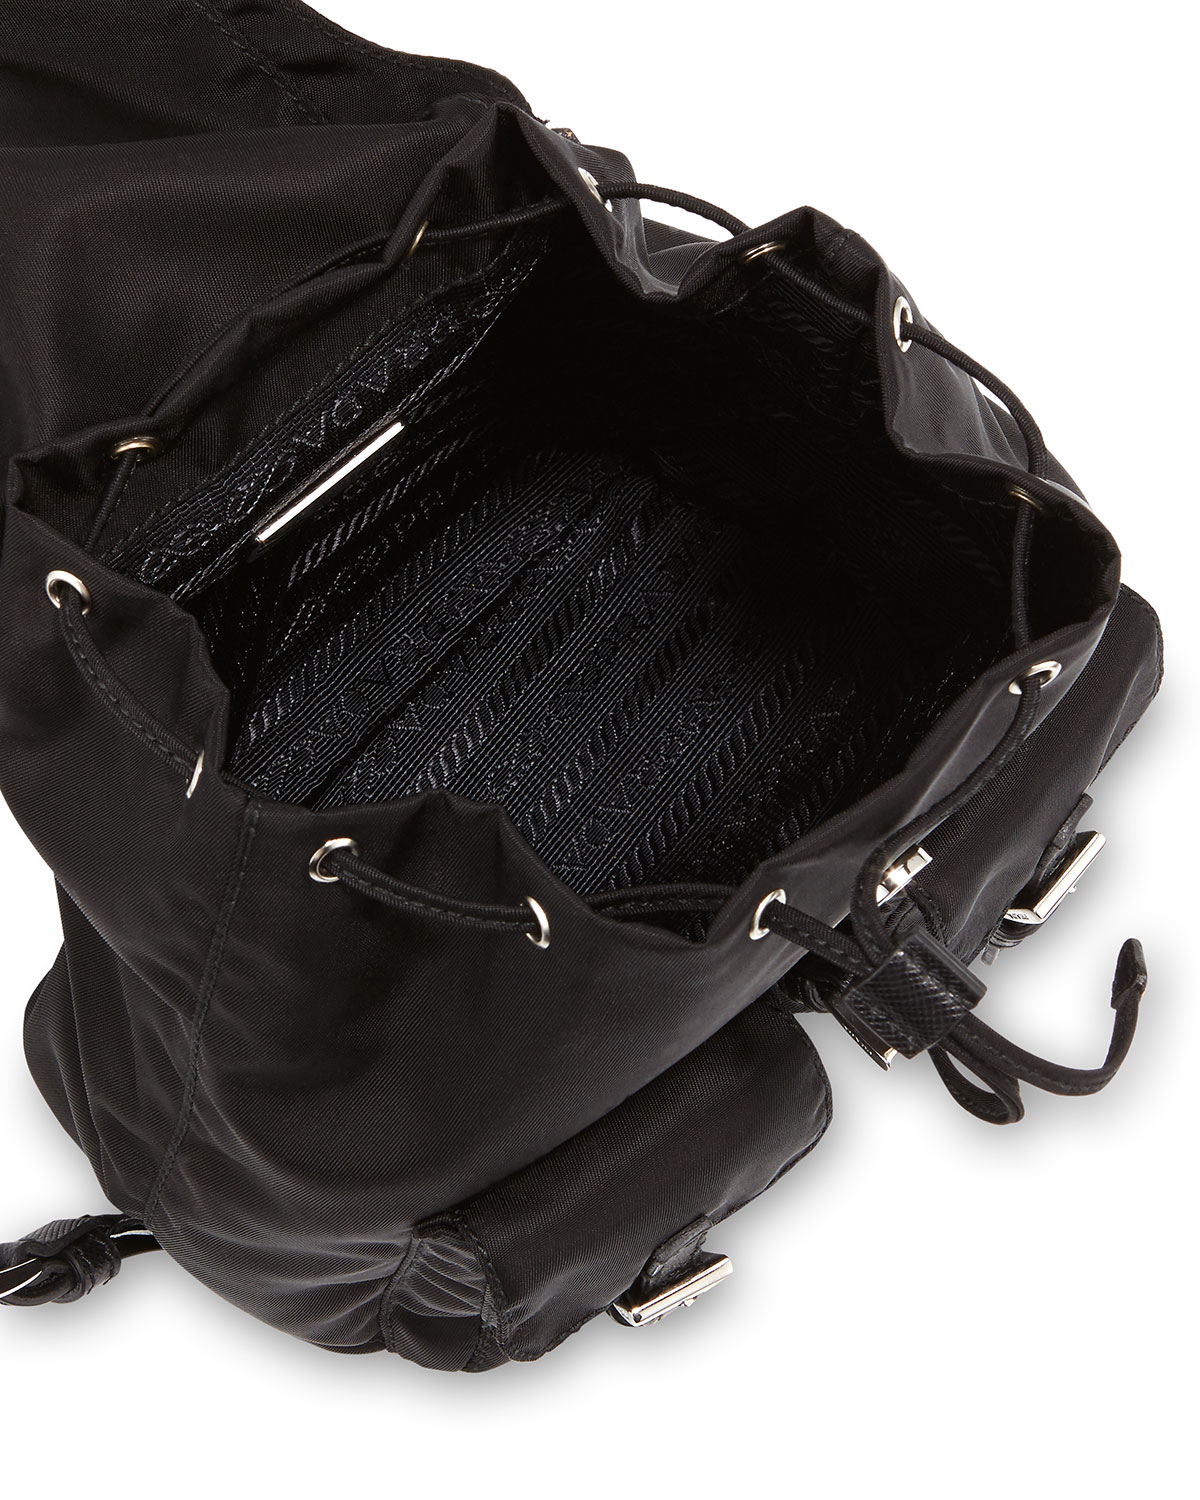 Prada Vela Nylon Crossbody Backpack in Black - Lyst